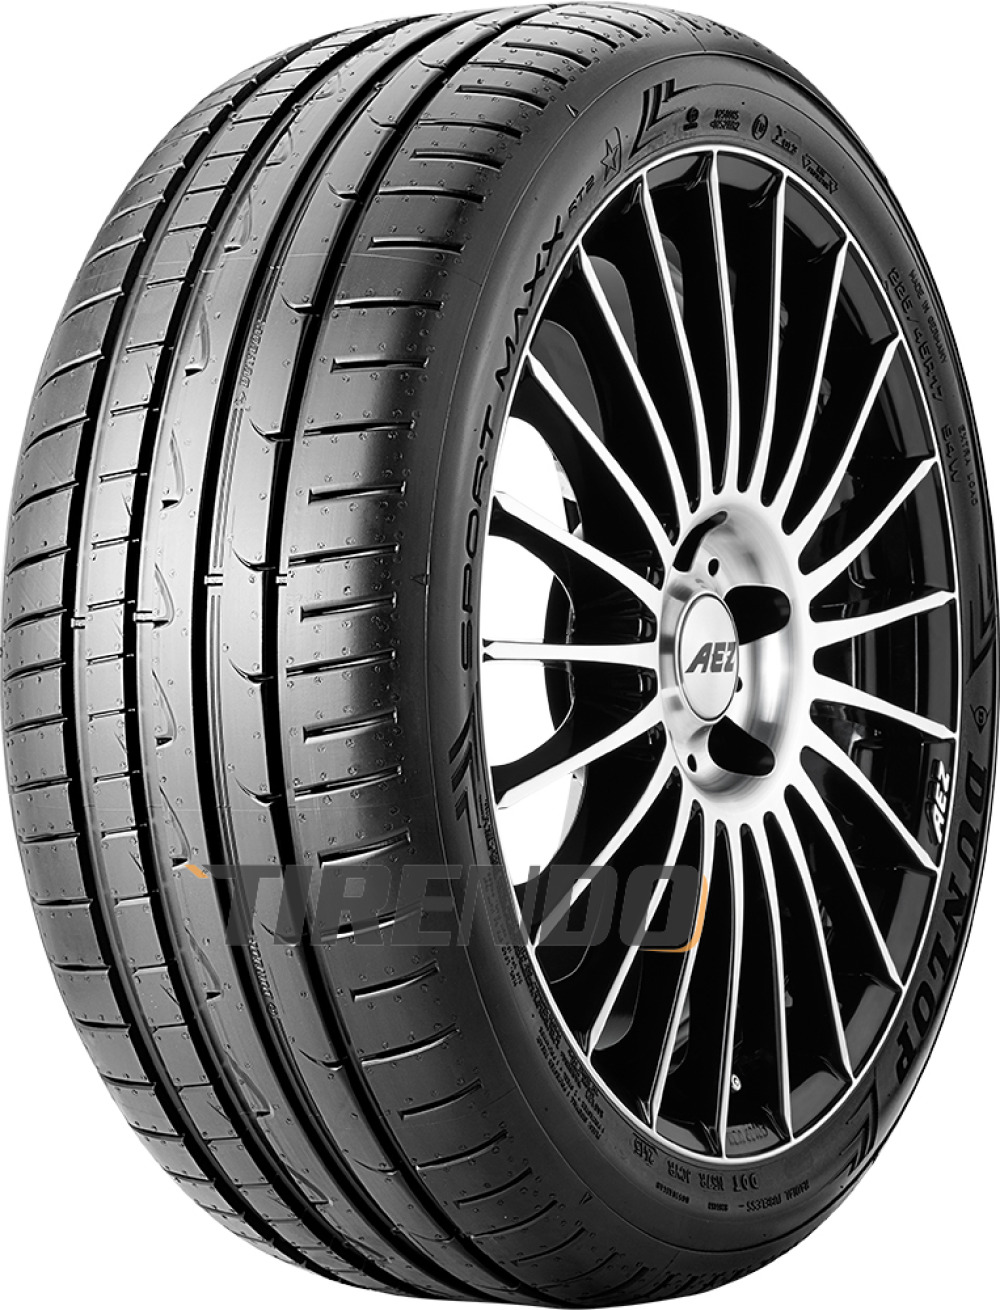 4x 235/45r18 (98y) (z)y Dunlop Sport Maxx Rt 2 Mfs Xl Reifen Sommer Pkw